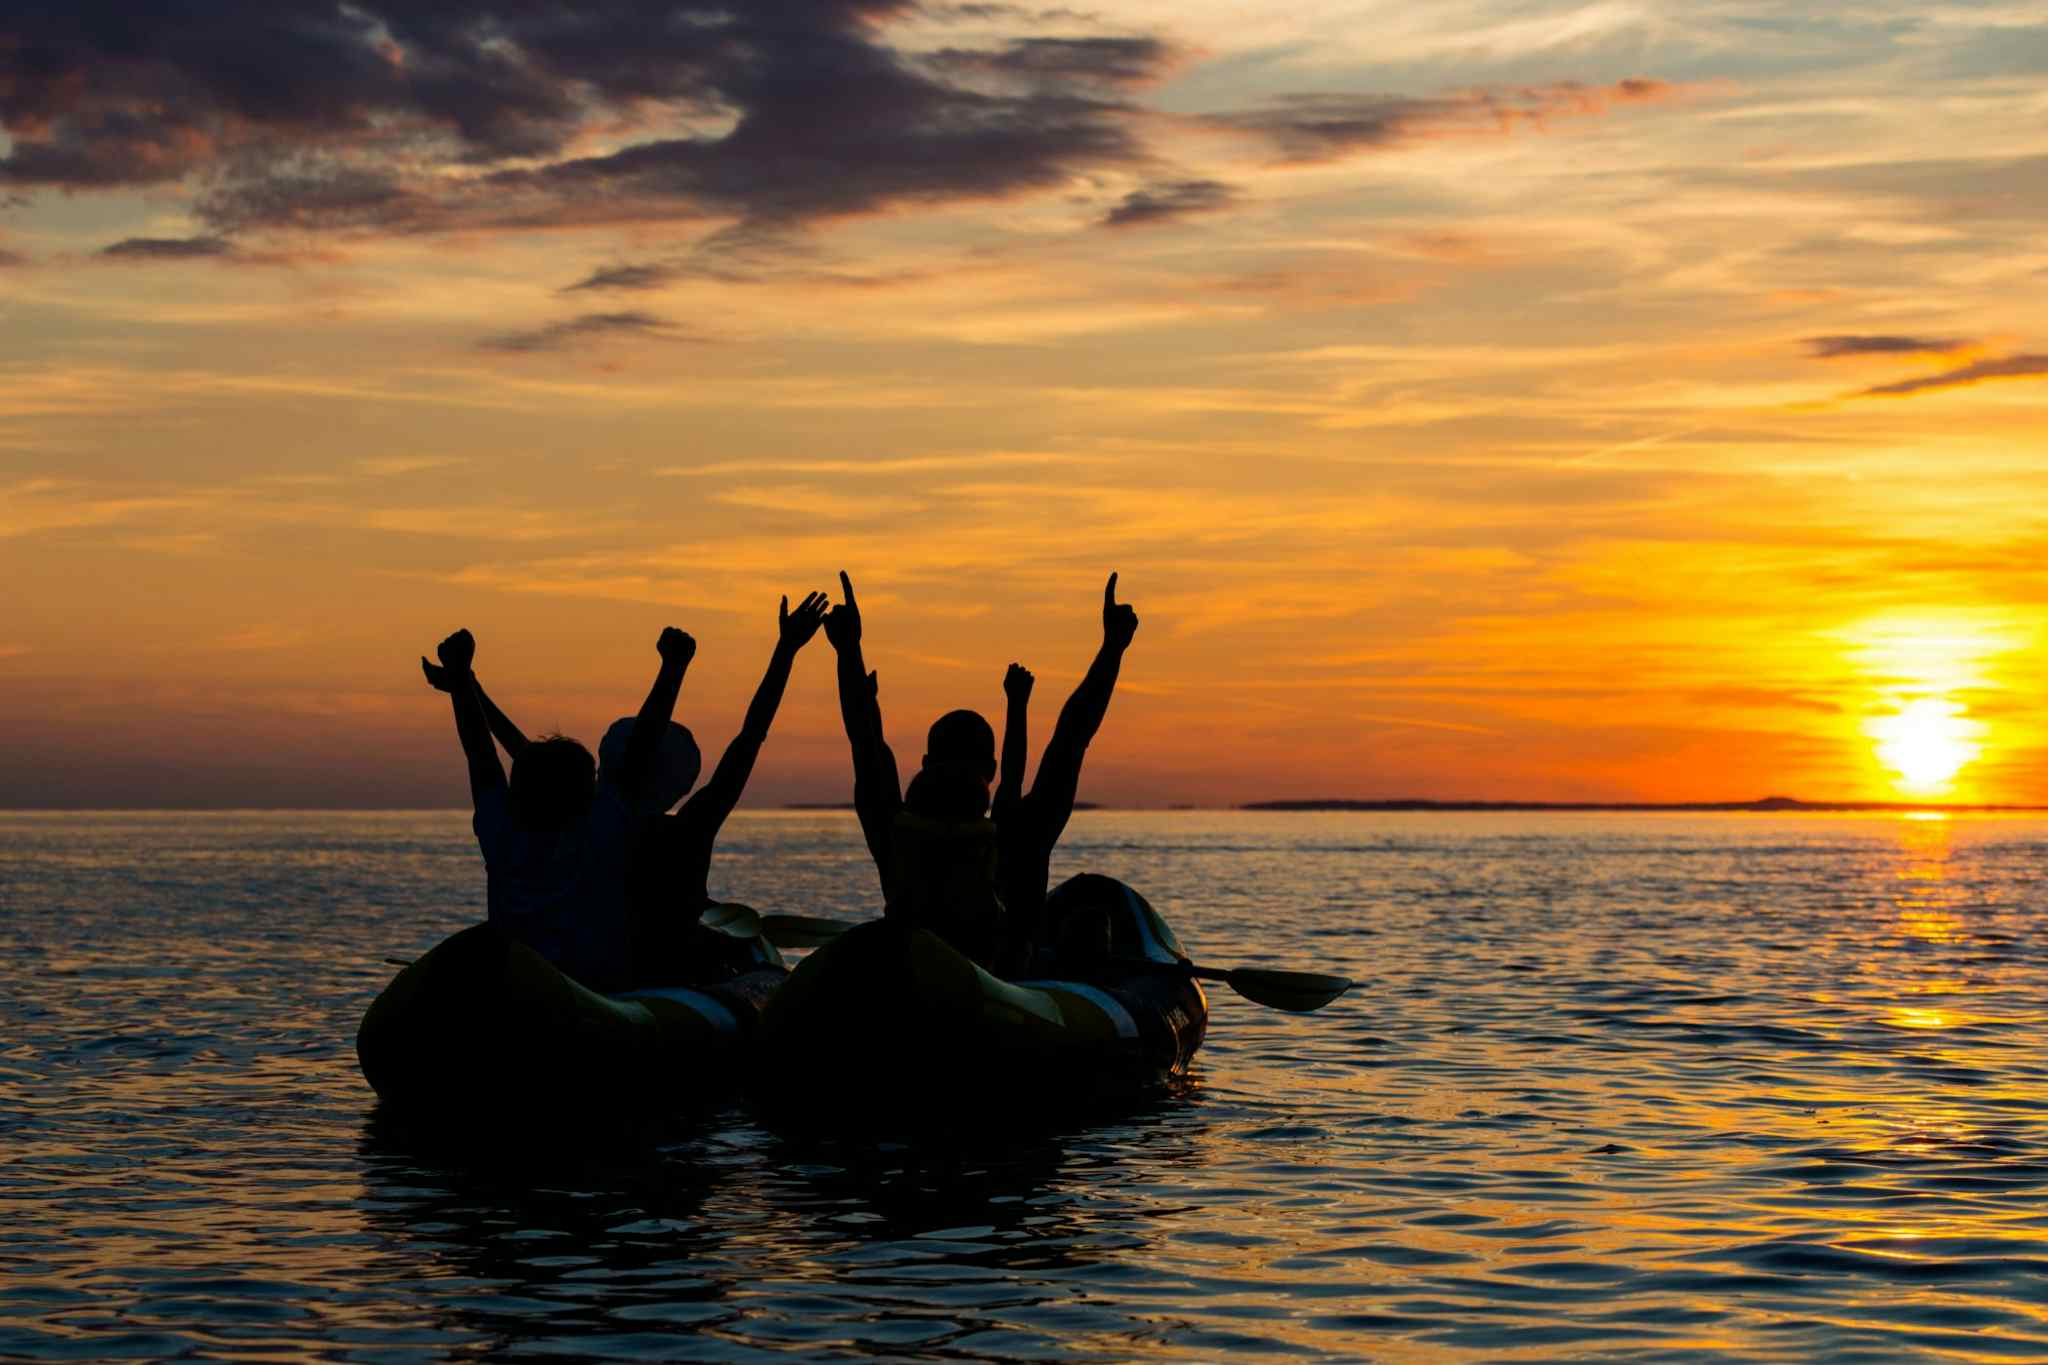 Athens Kayaking, Greece. Photo: Canva - https://www.canva.com/photos/MAEErehWEv4-family-rejoicing-in-sea-kayaks-at-sunset/